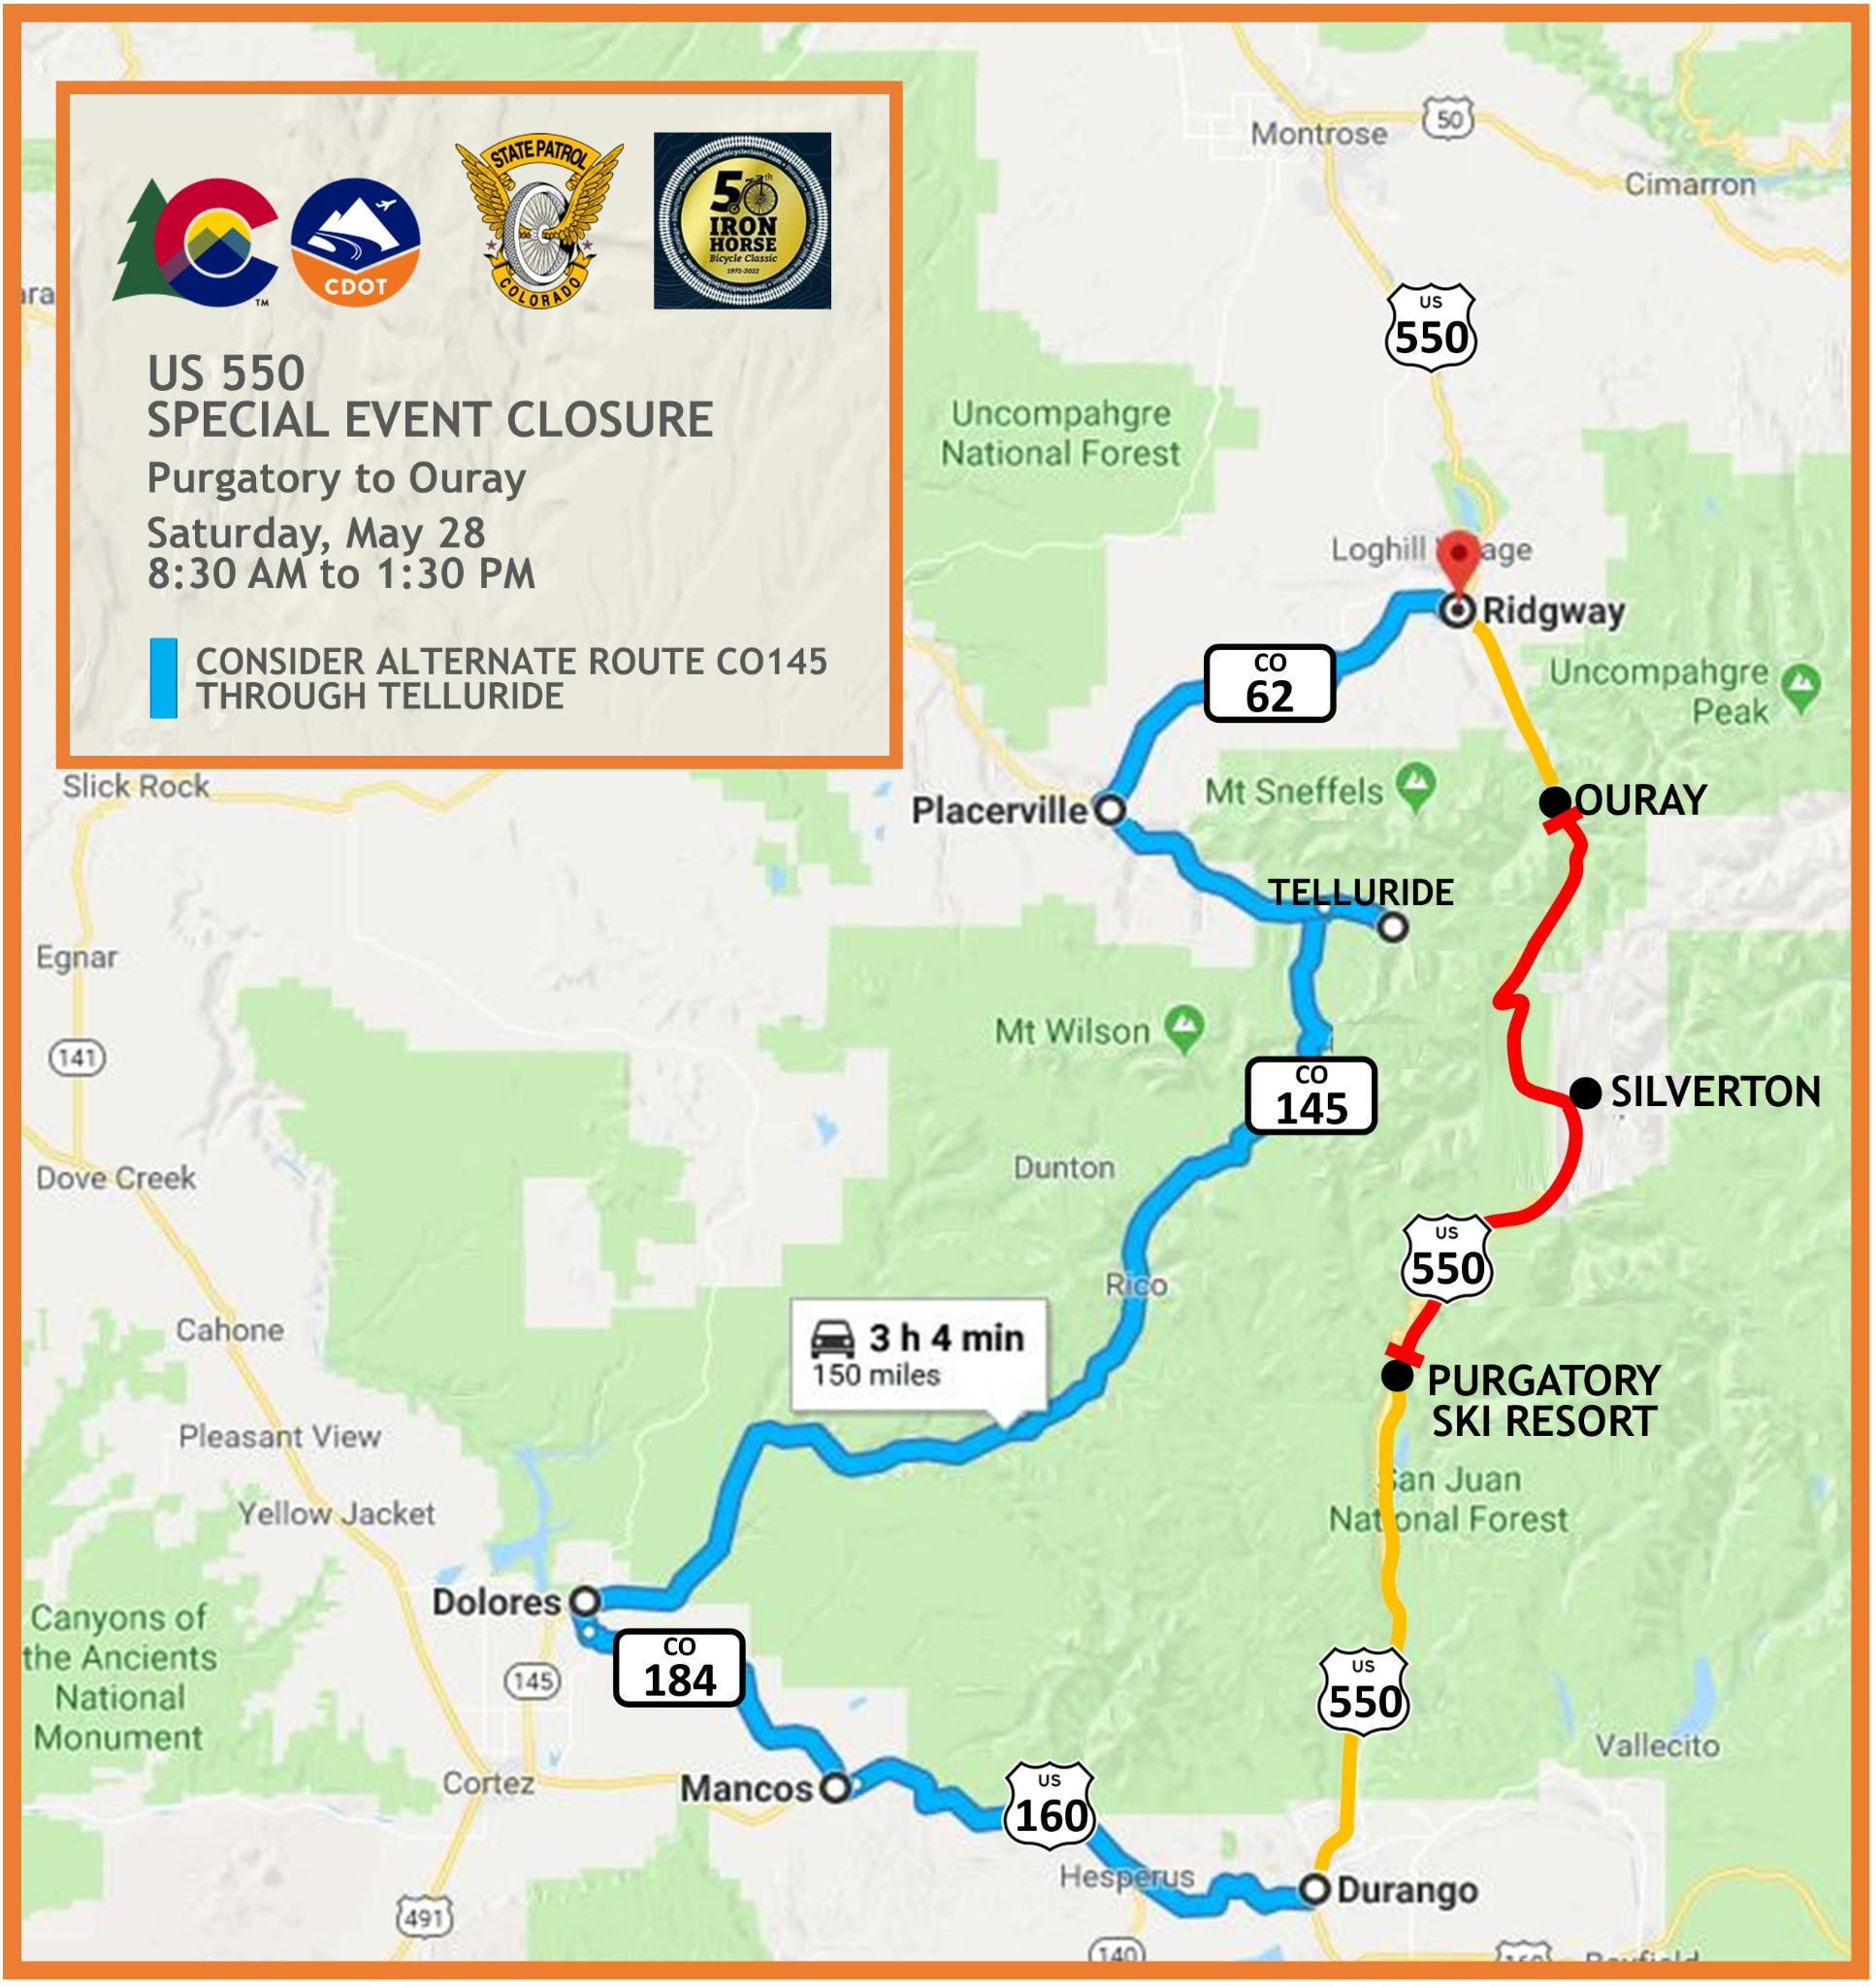 US 550 Iron Horse event closure map detail image